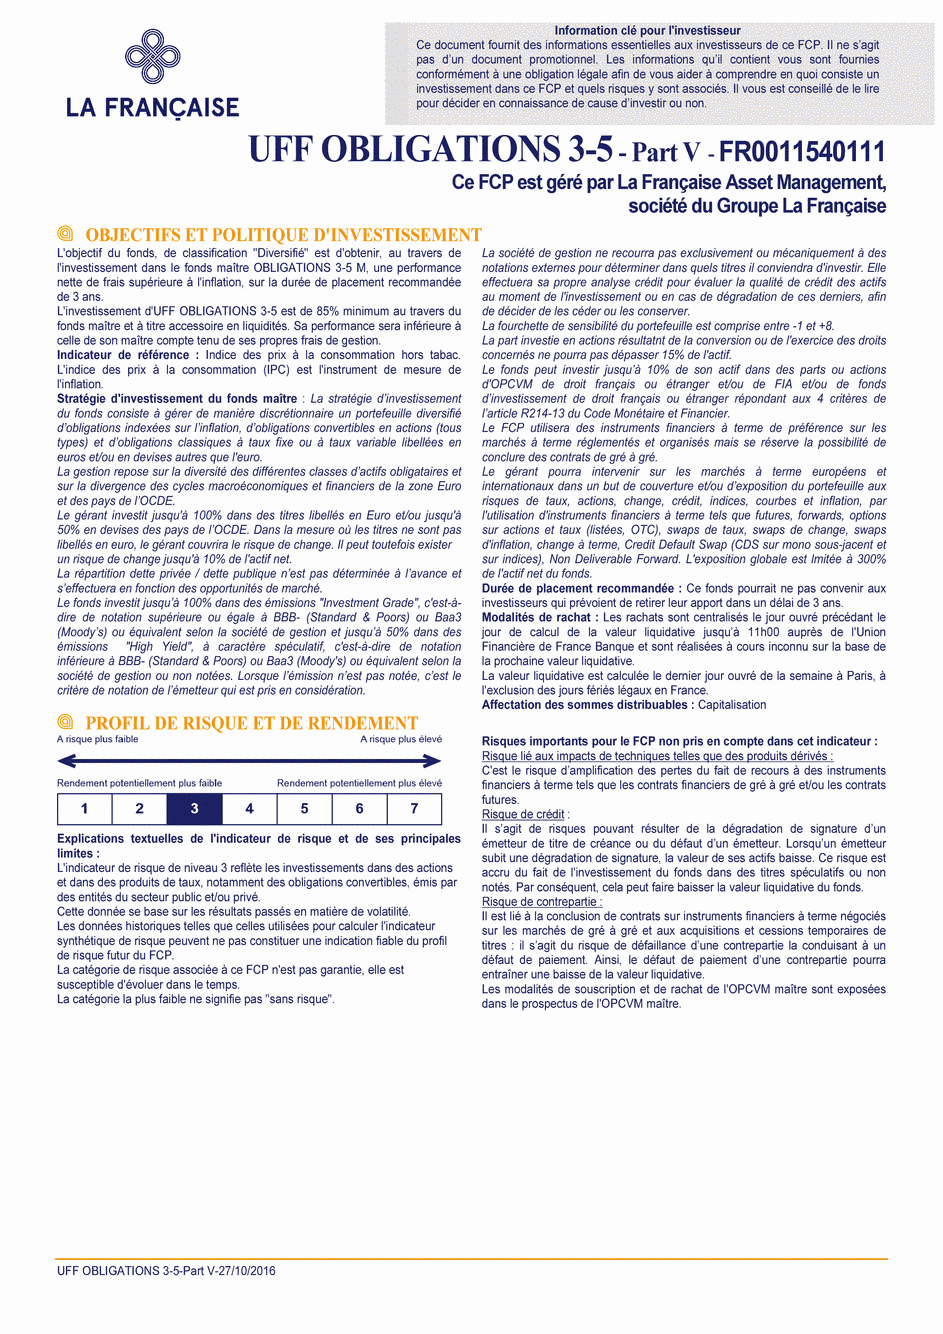 DICI UFF Obligations 3-5 (Part V) - 27/10/2016 - Français